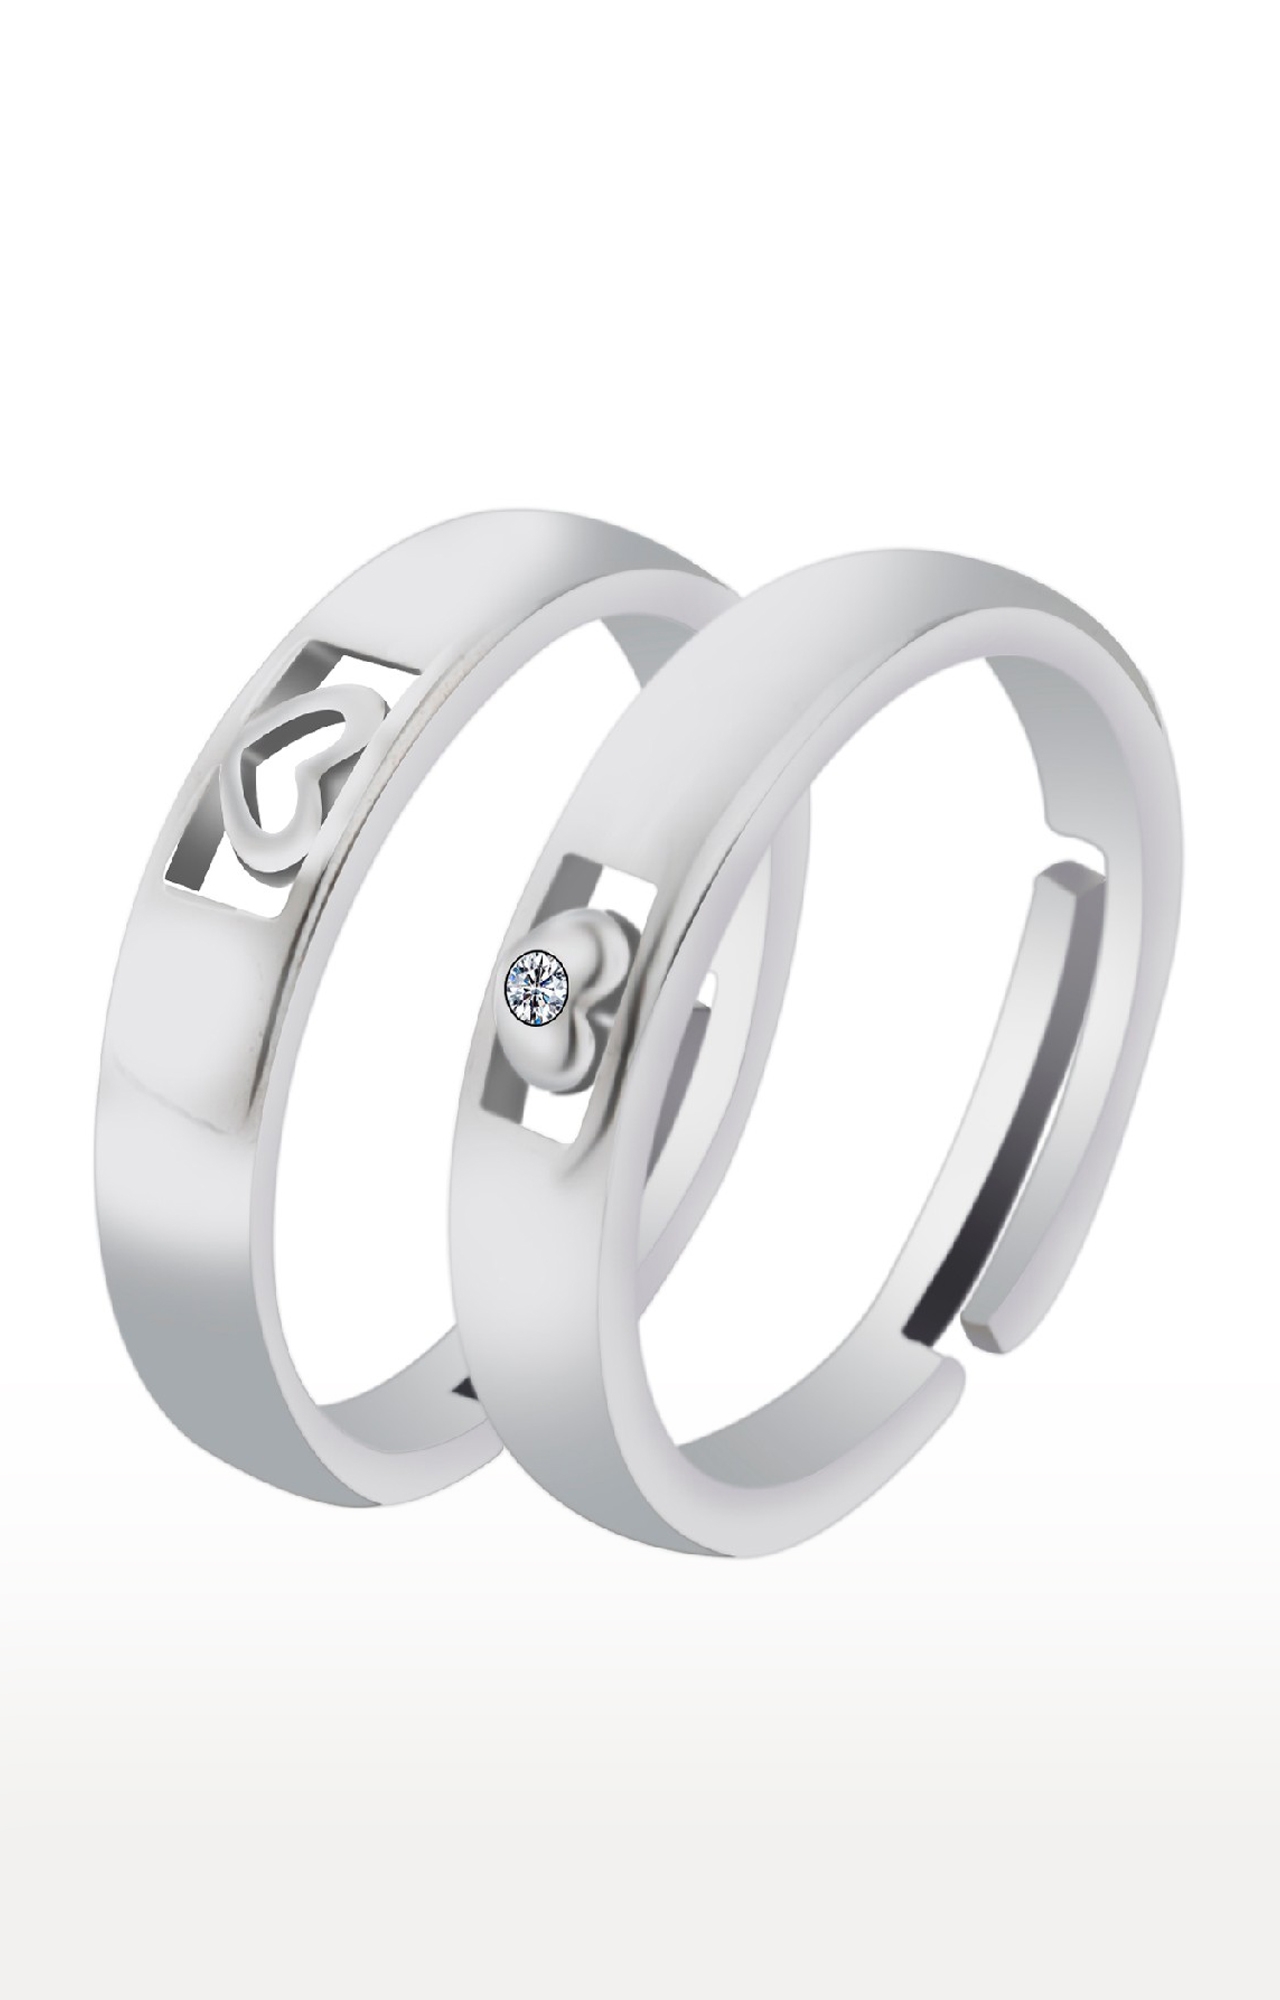 Silver Moon Couple Rings Set – Handmado.com